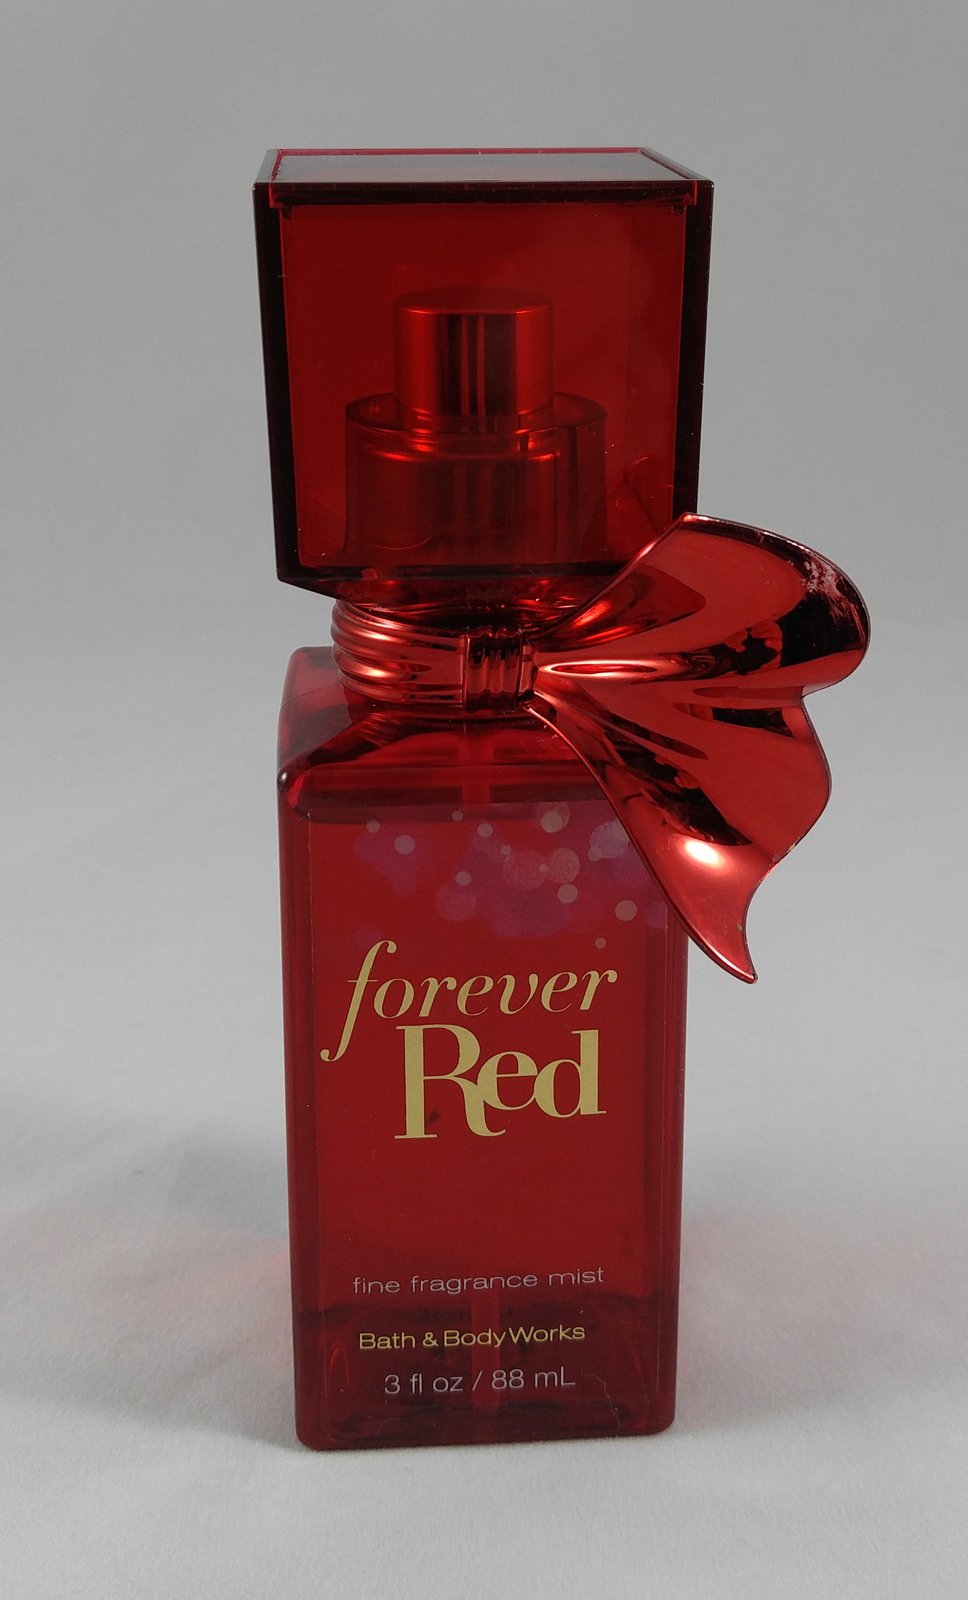 Primary image for Bath & Body Works Forever Red Fine Fragrance Mist 3 fl oz Travel Size